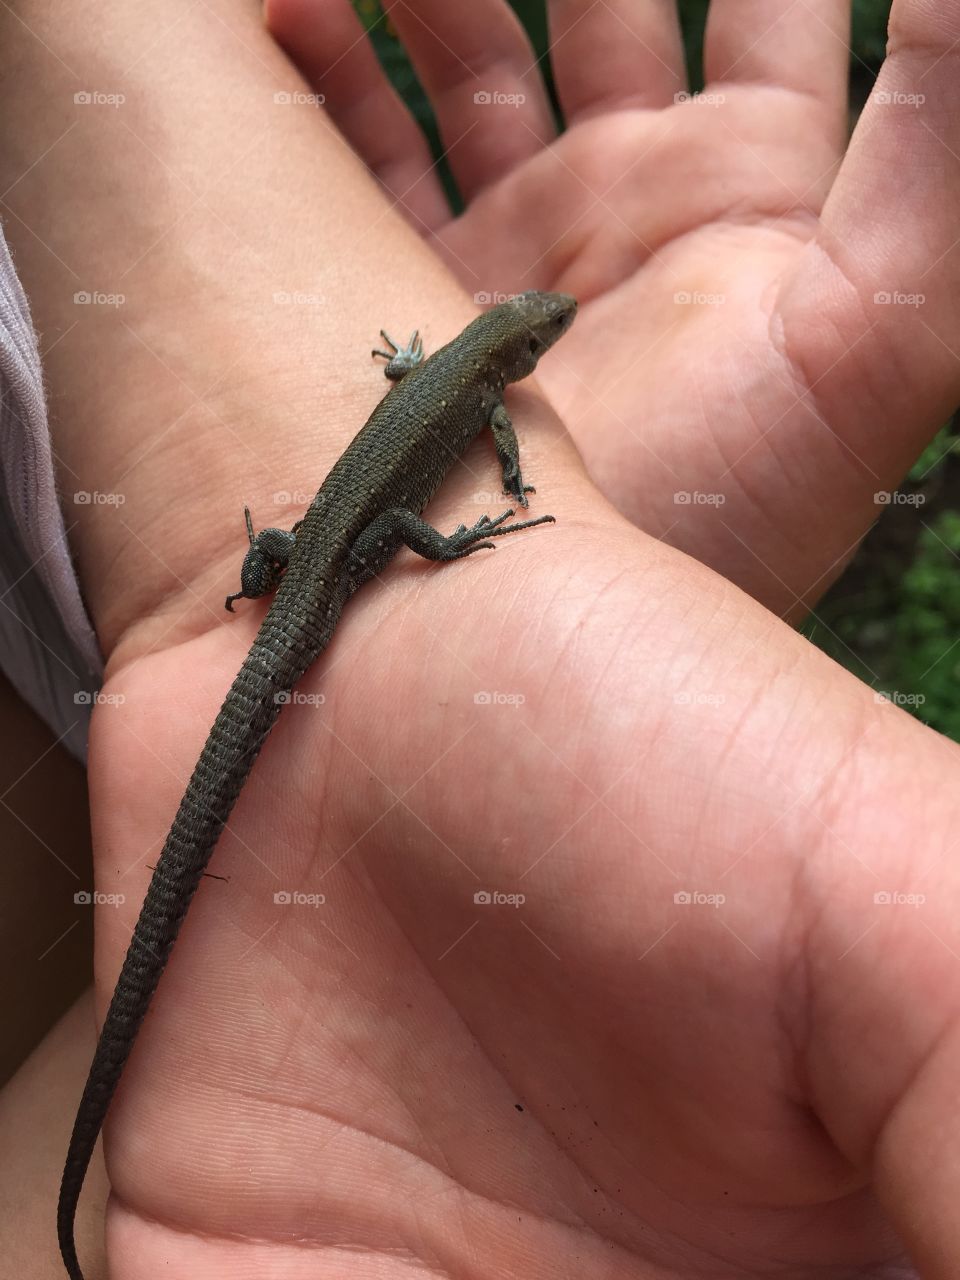 Lizard sitting on a palm